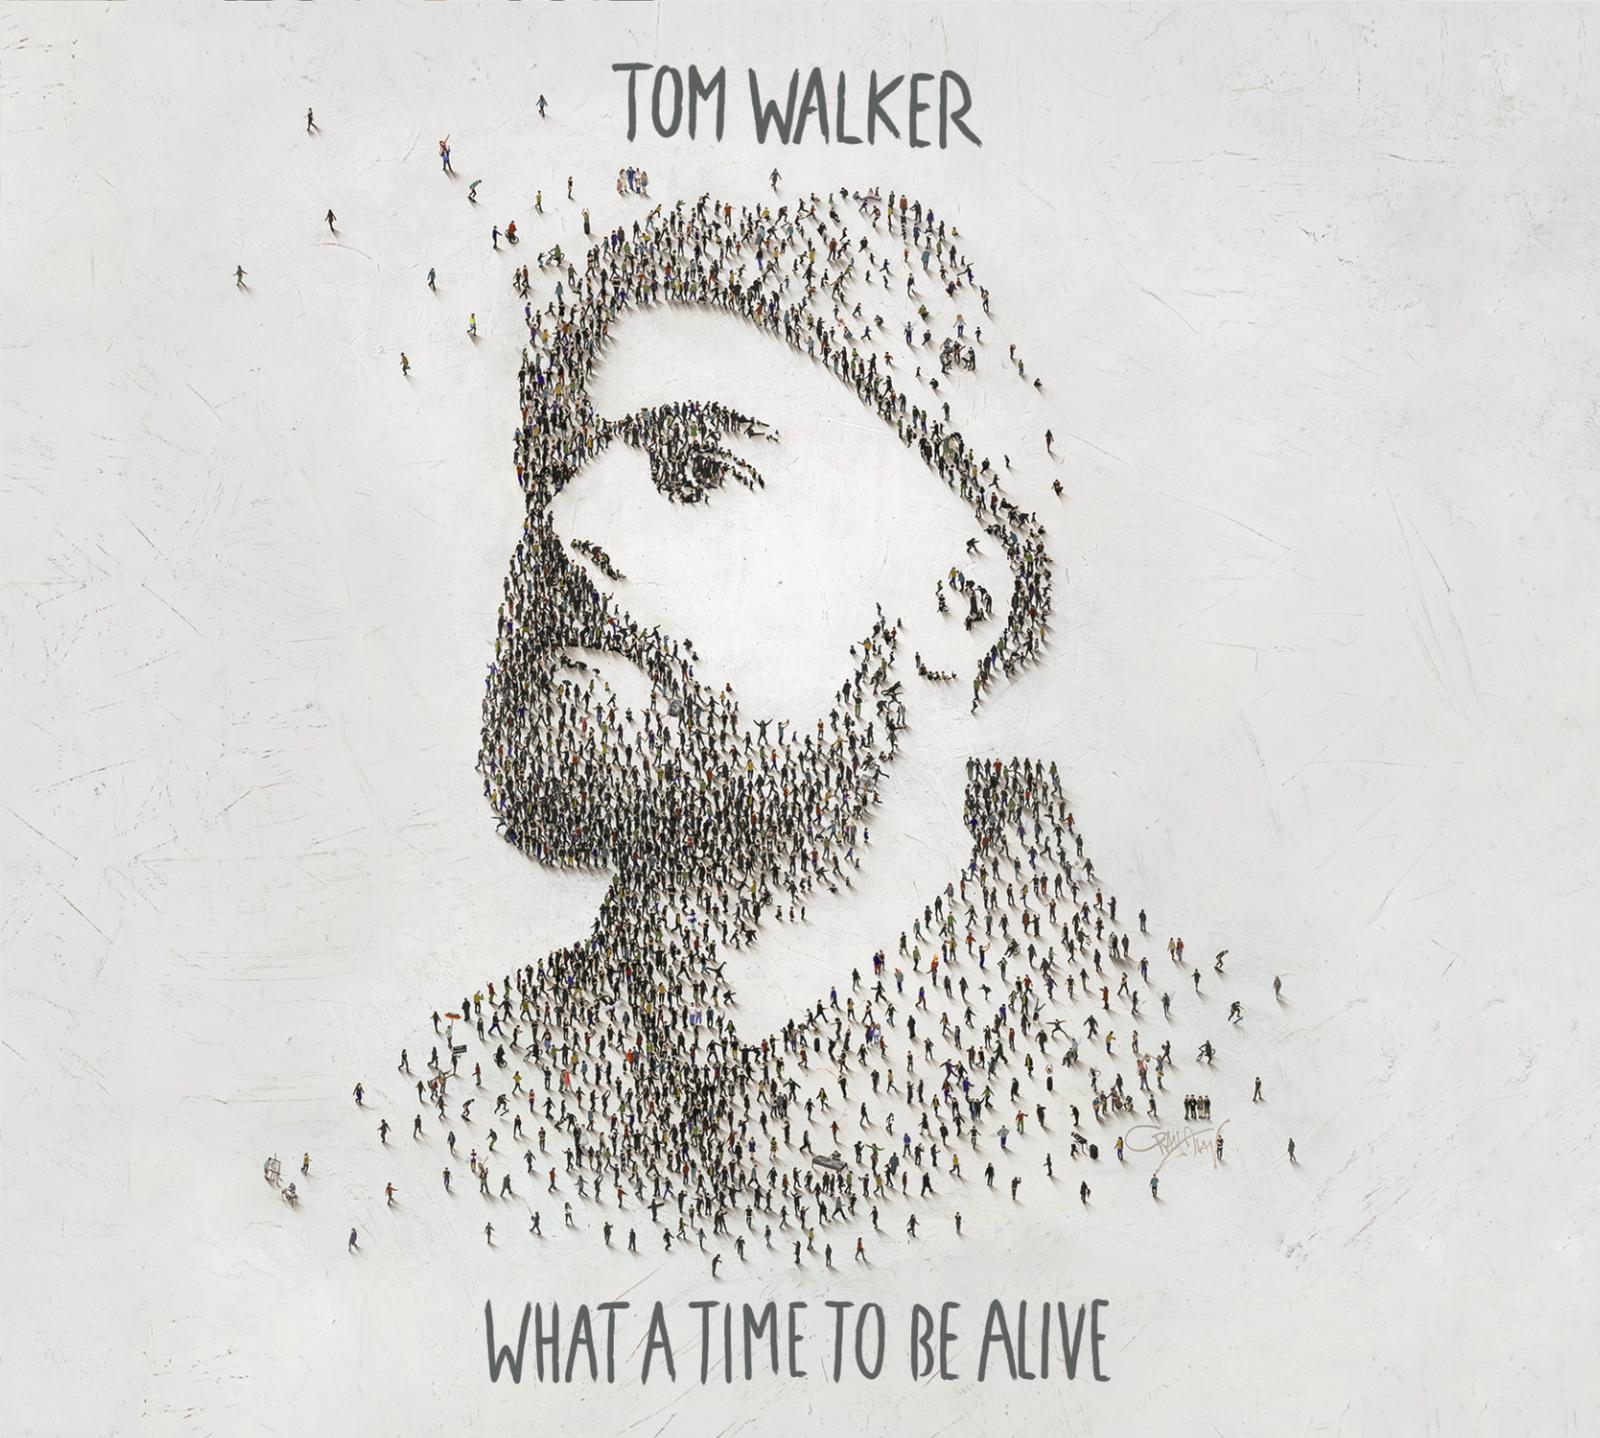 TomWalker